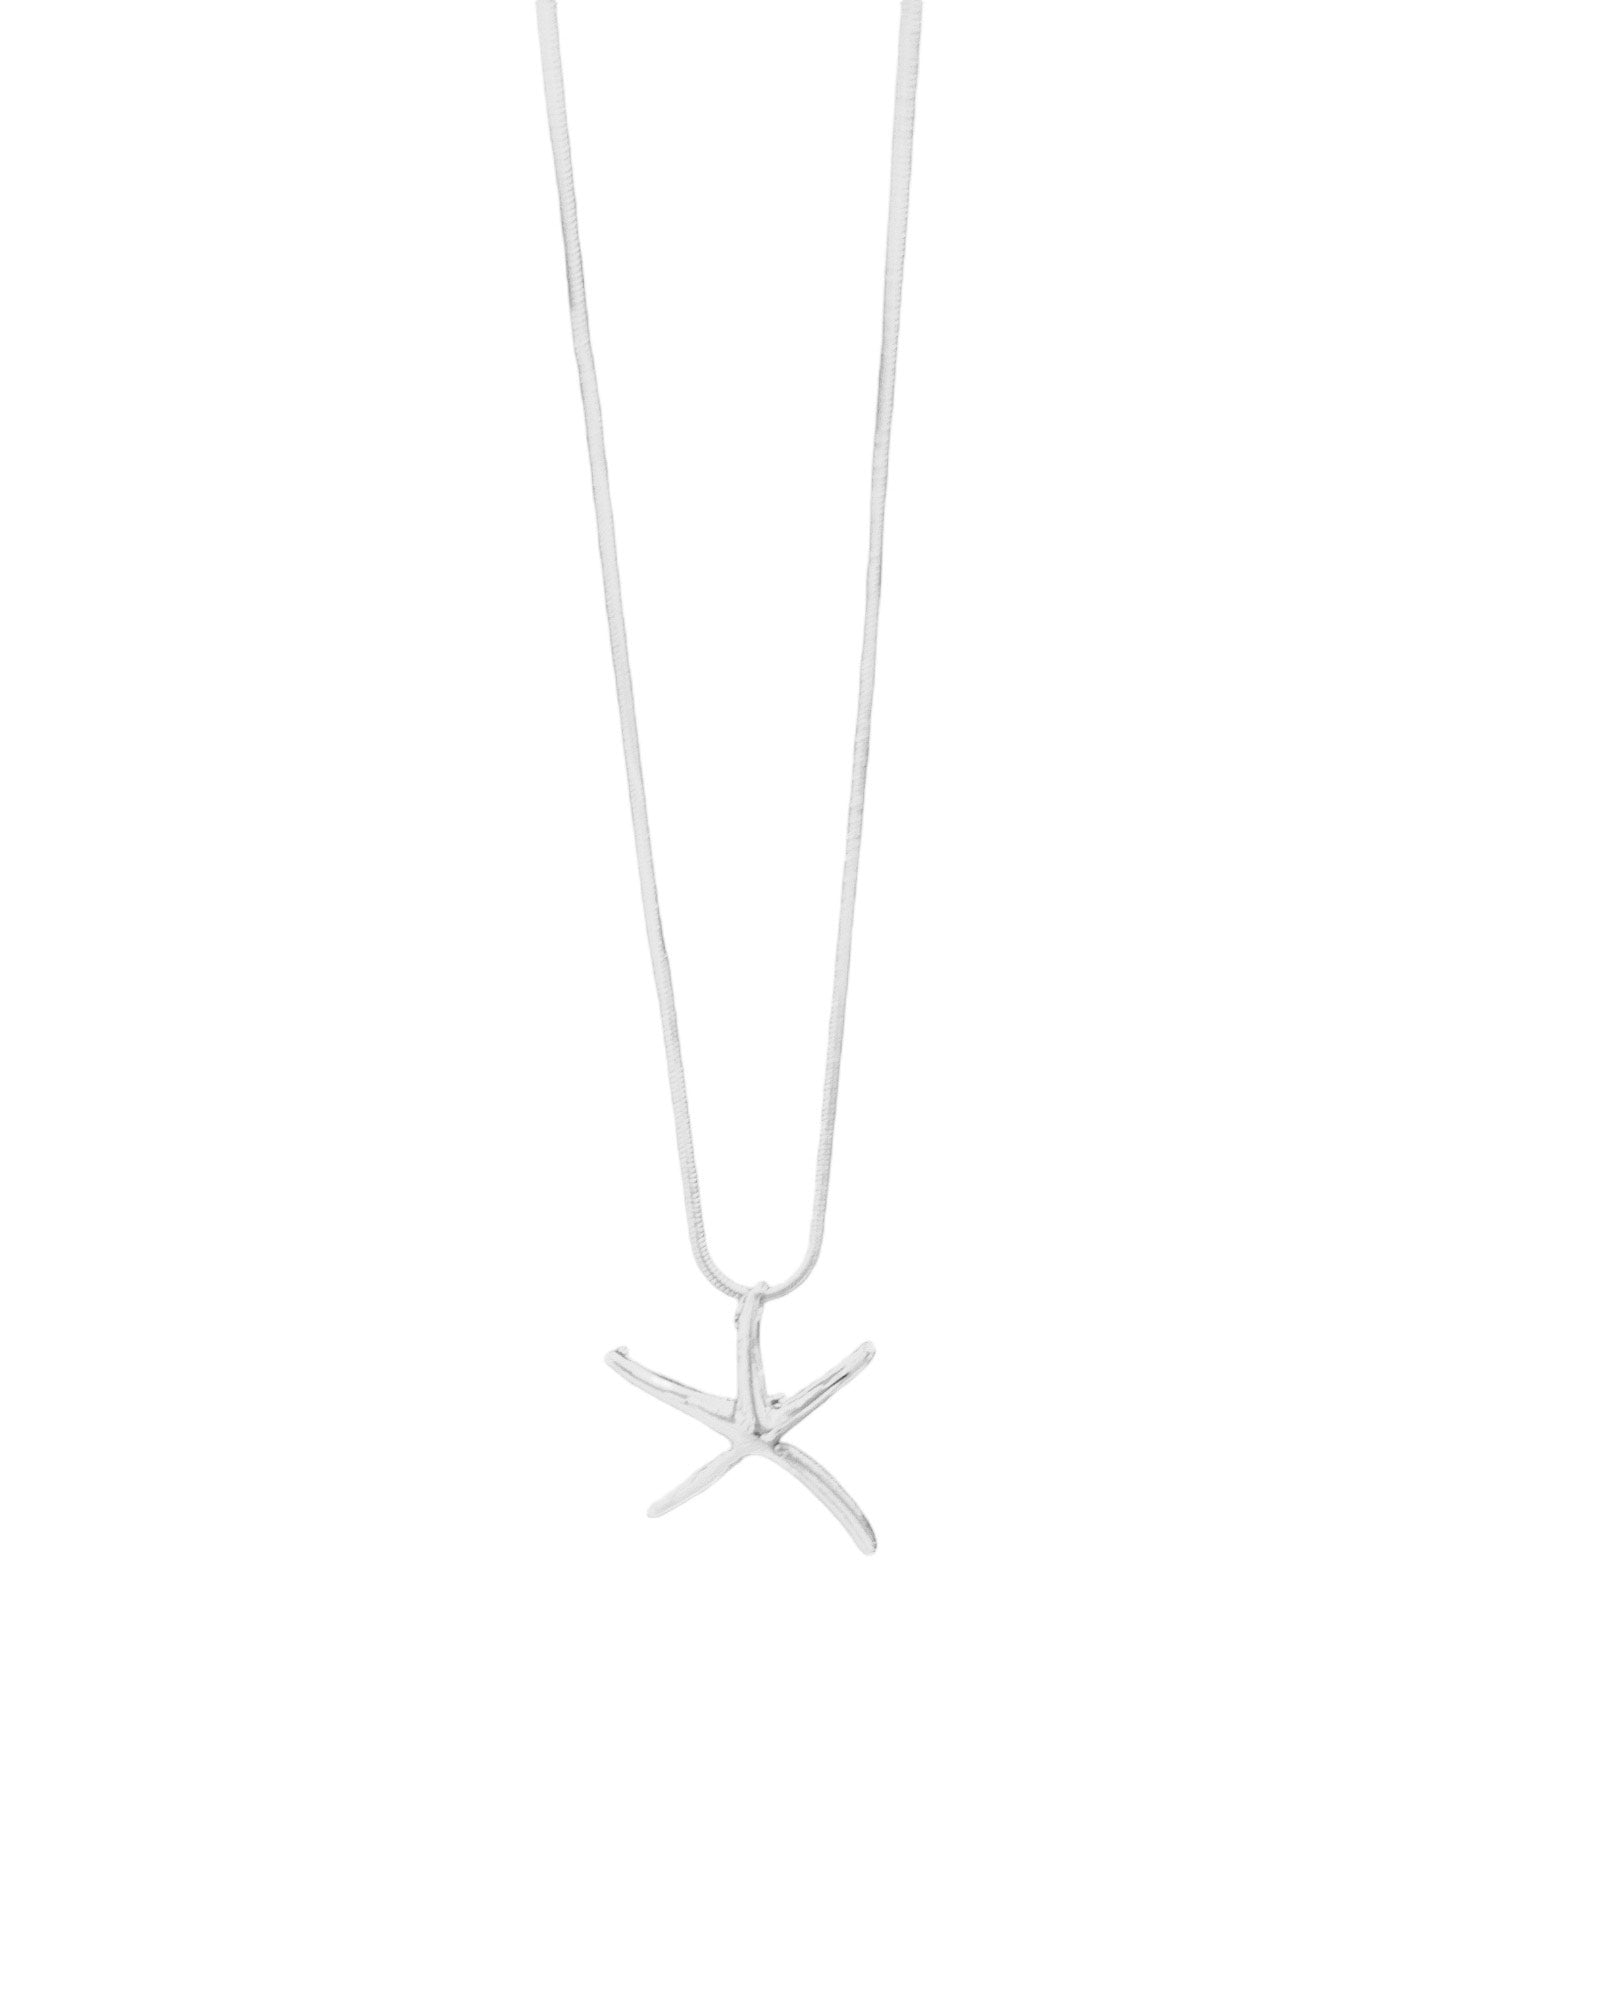 MEDIUM PLAIN STARFISH NECKLACE- Medium starfish on a plain chain, silver